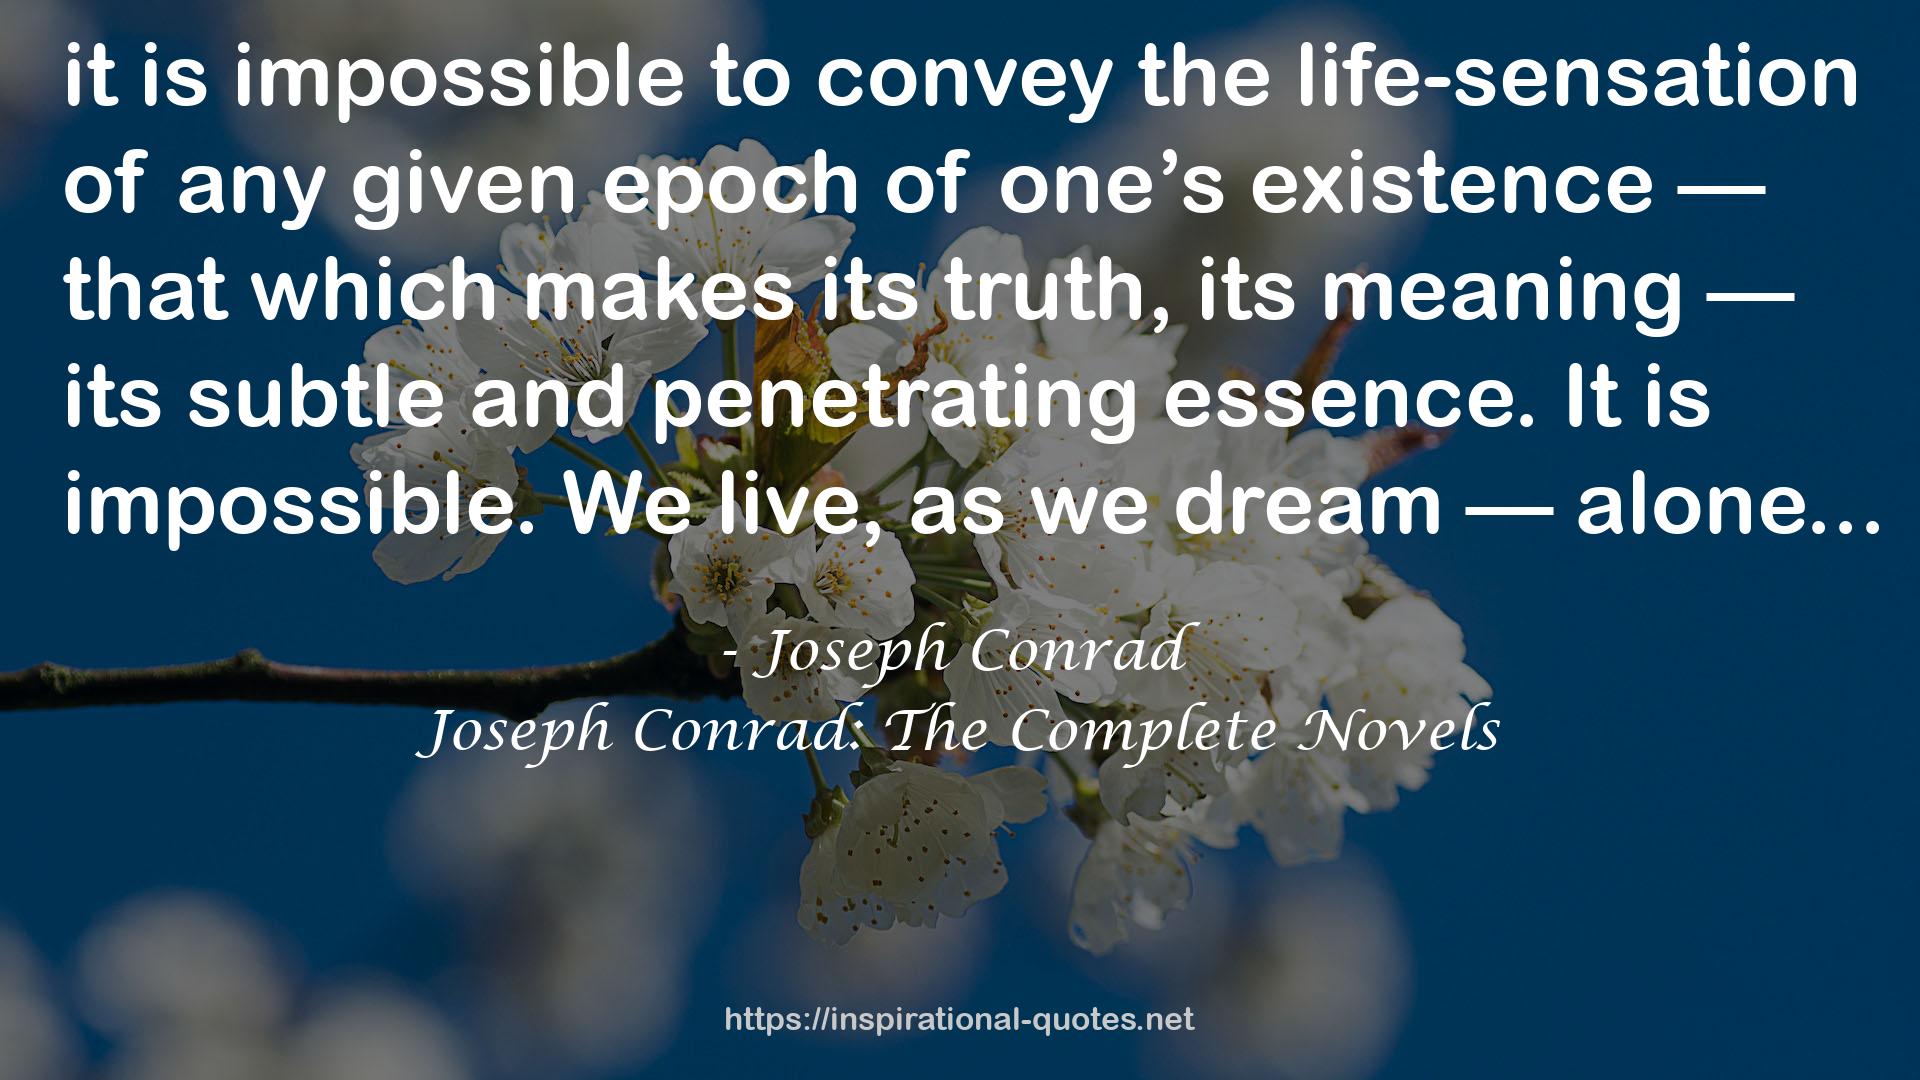 Joseph Conrad: The Complete Novels QUOTES